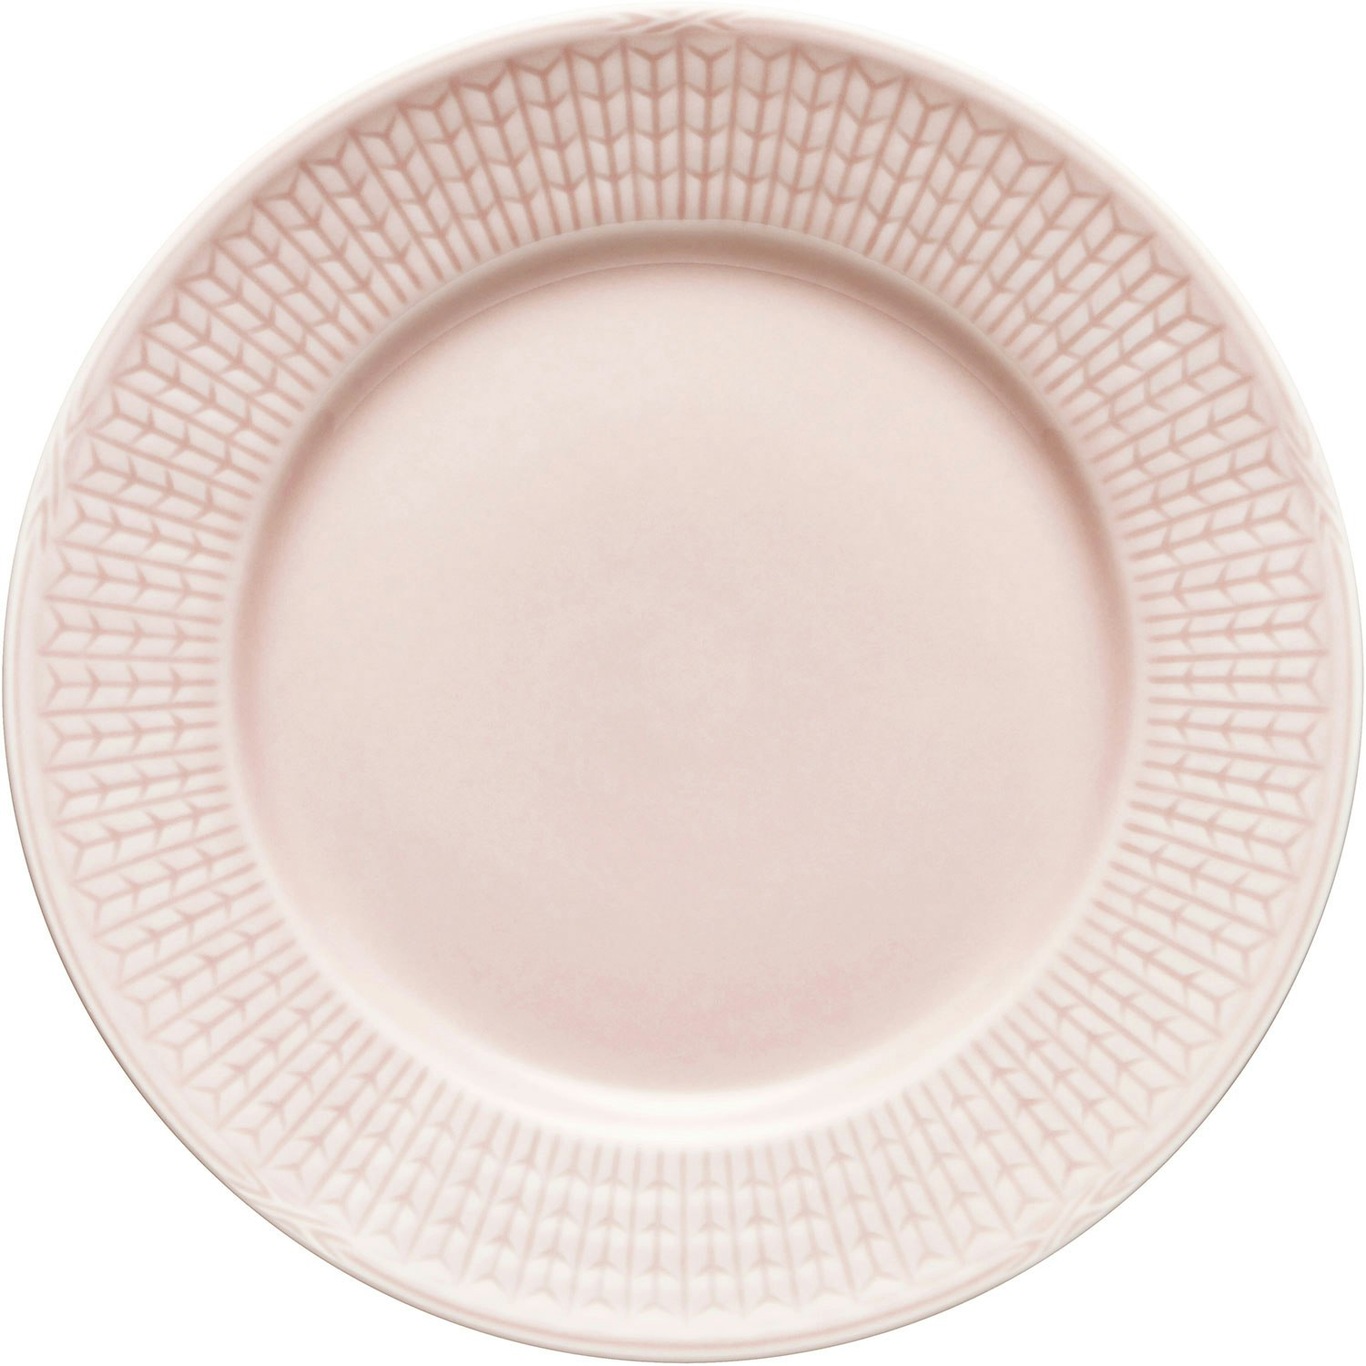 Swedish Grace Side Plate 17 cm, Rose (Pink)